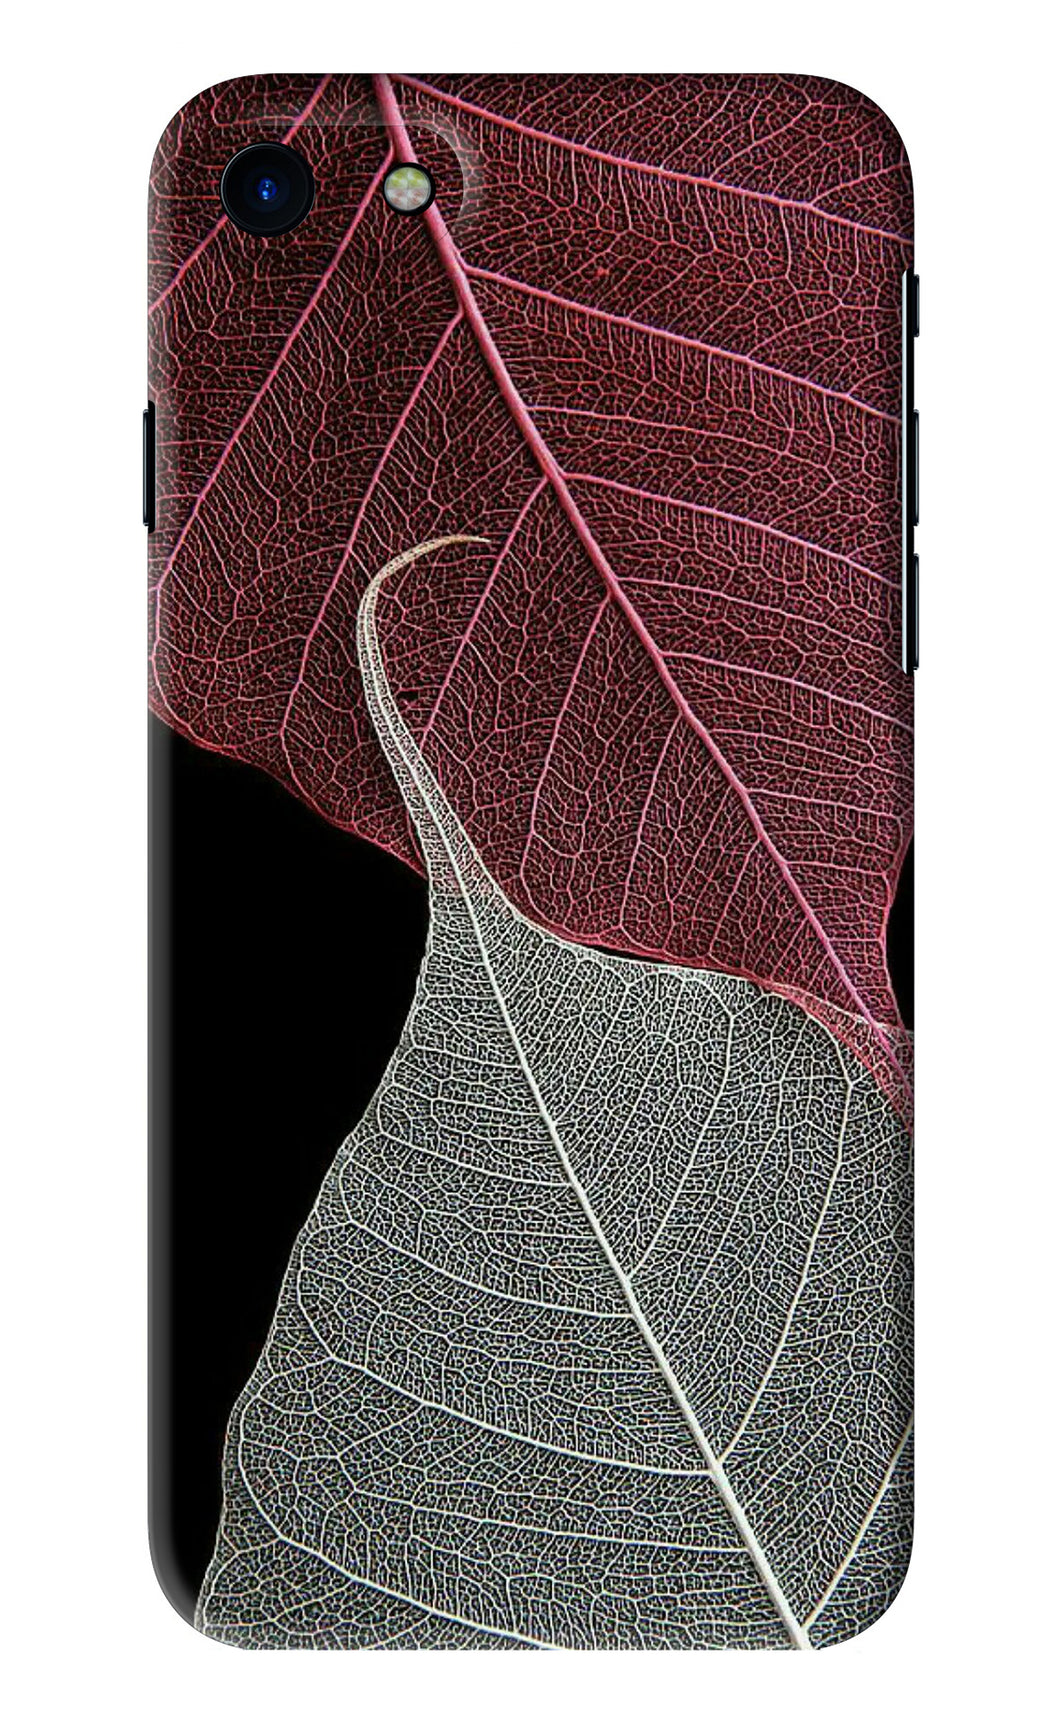 Leaf Pattern iPhone 8 Back Skin Wrap